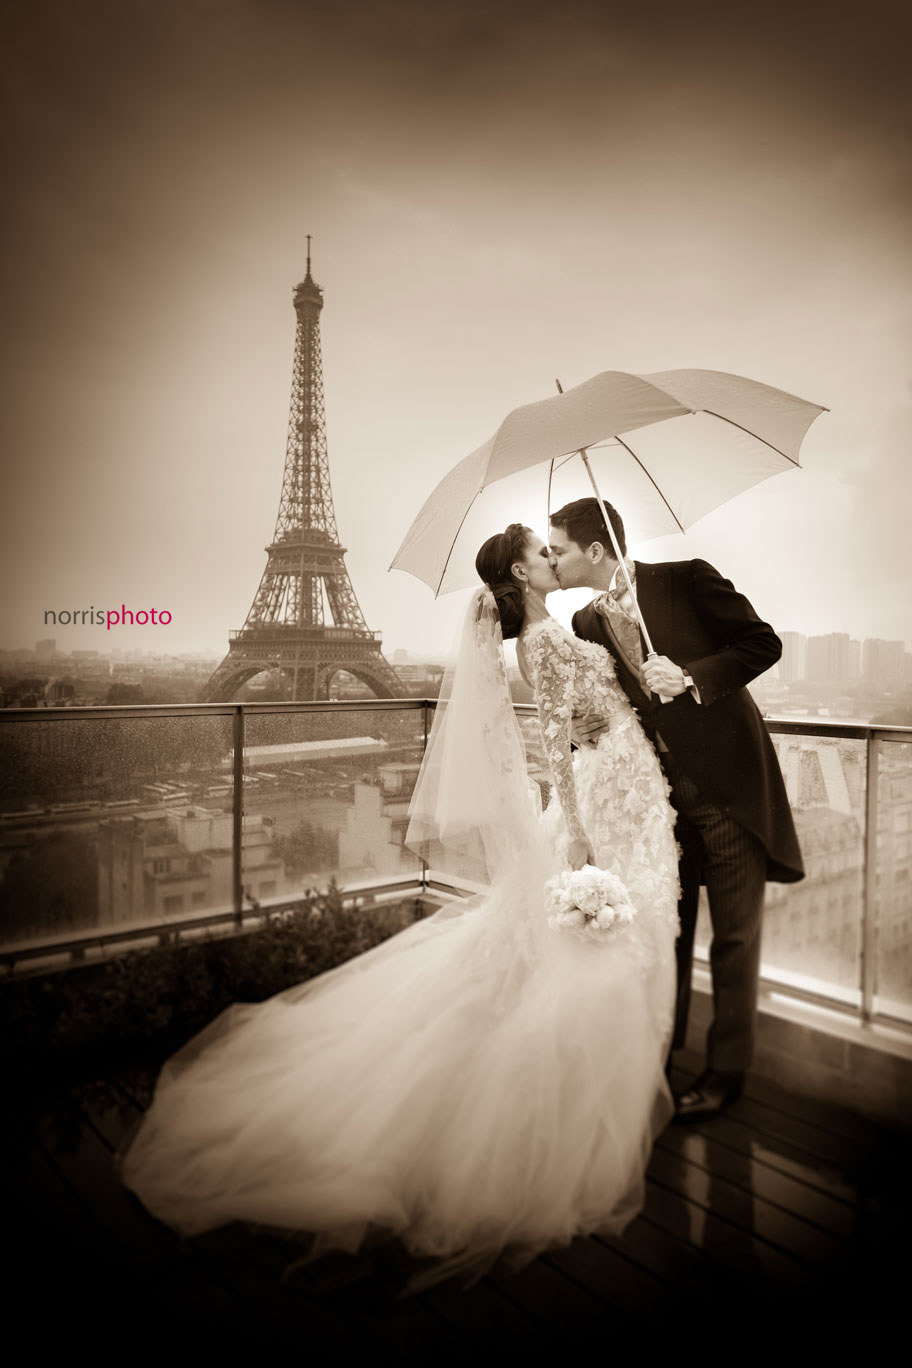 infrared-wedding-photography-paris-couple